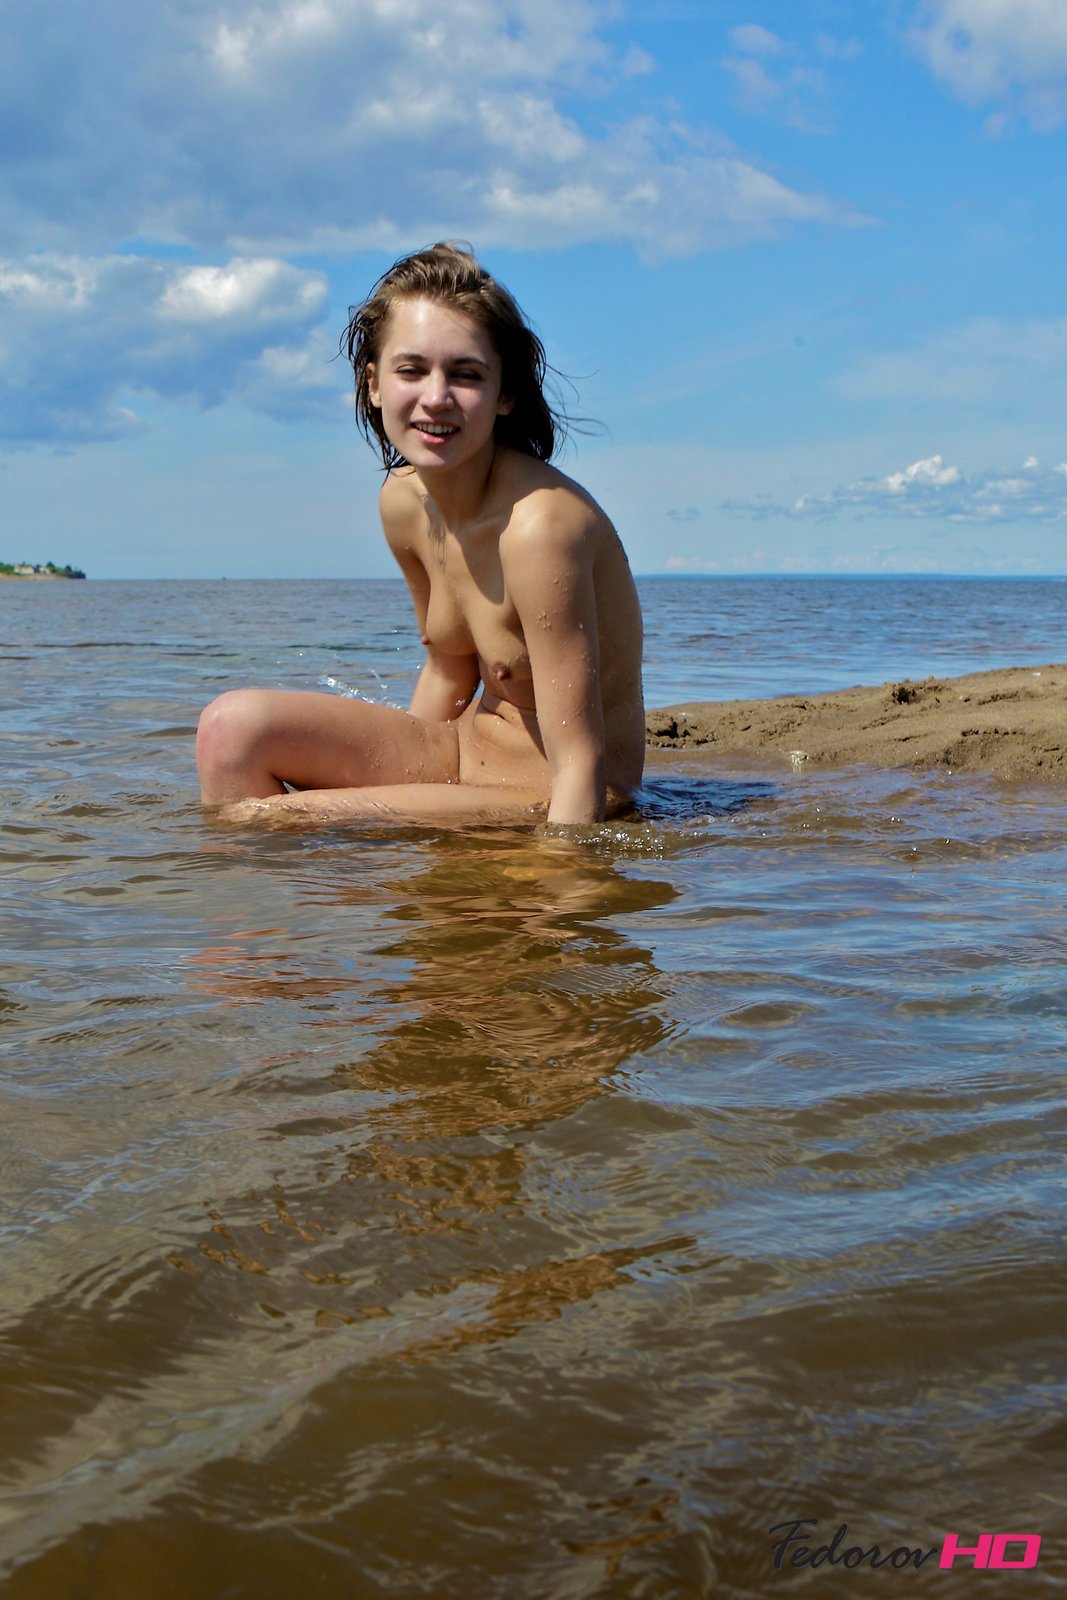 Fedorov Hd Lera Gulf Teen Erotic Nude Beach Photography Pichunter